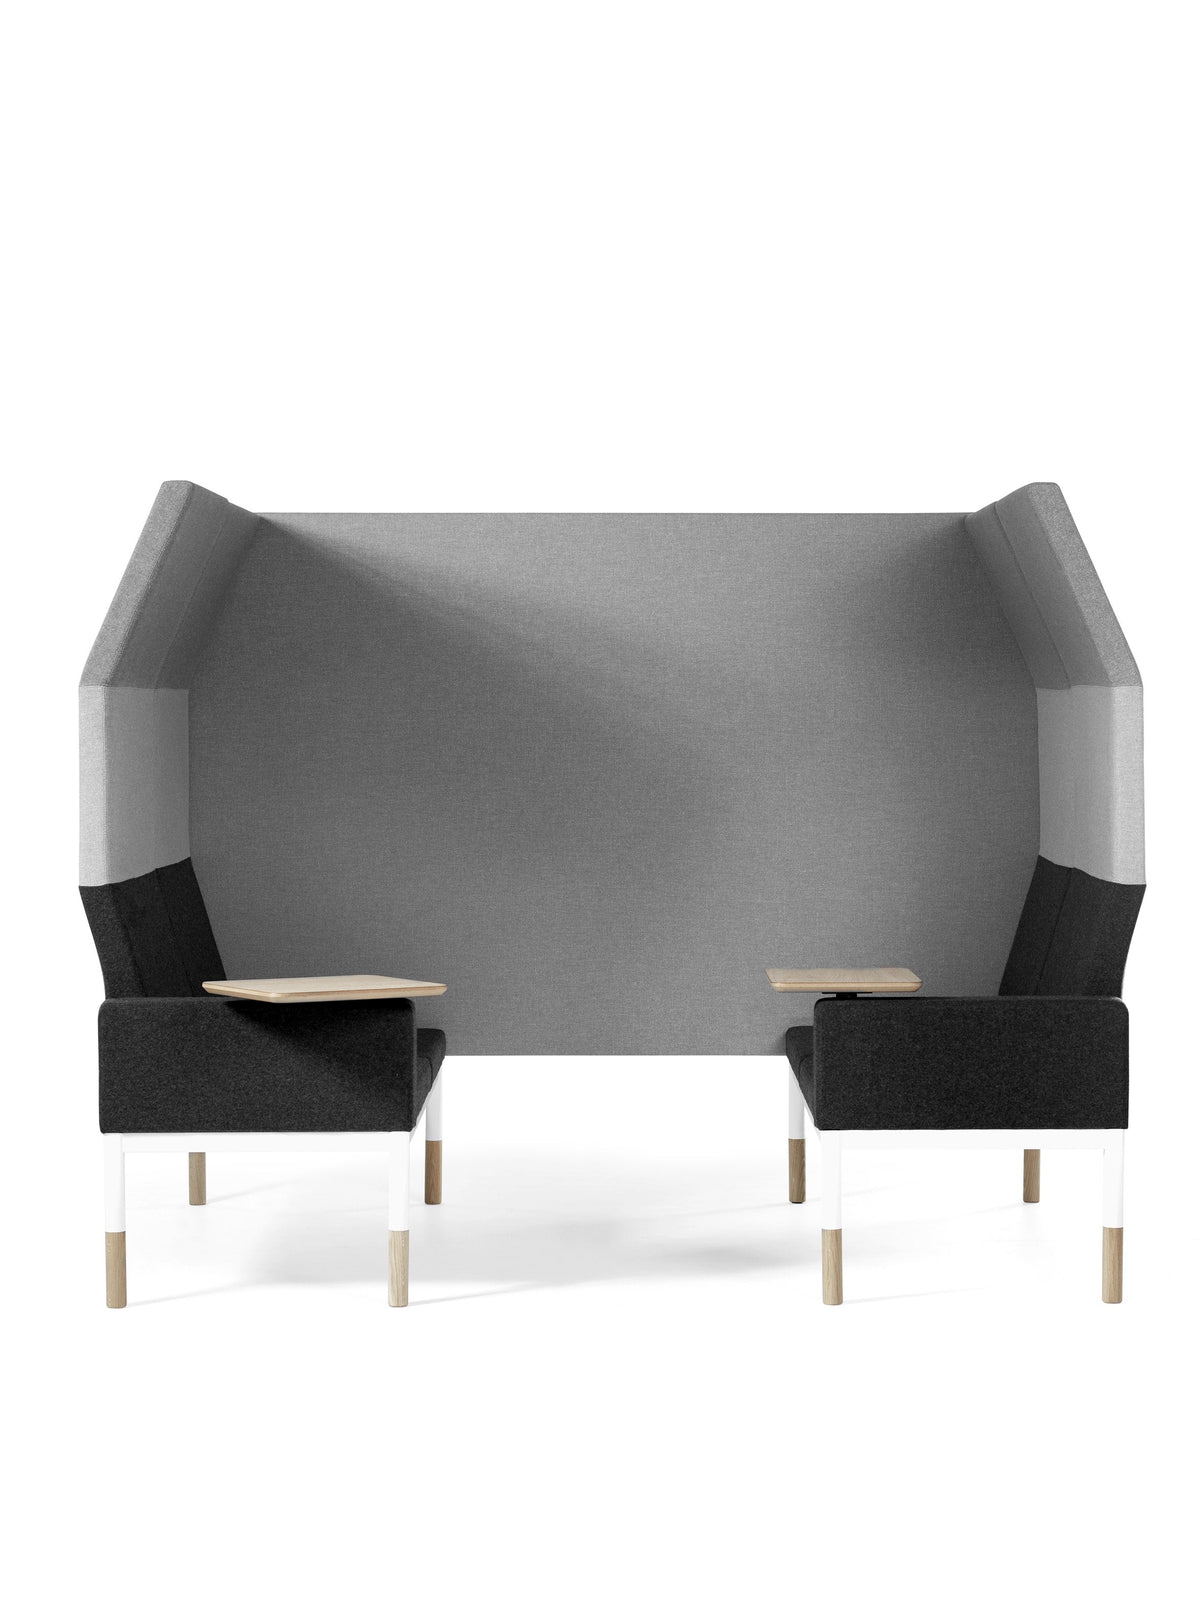 Reform Meeting Room-Johanson Design-Contract Furniture Store